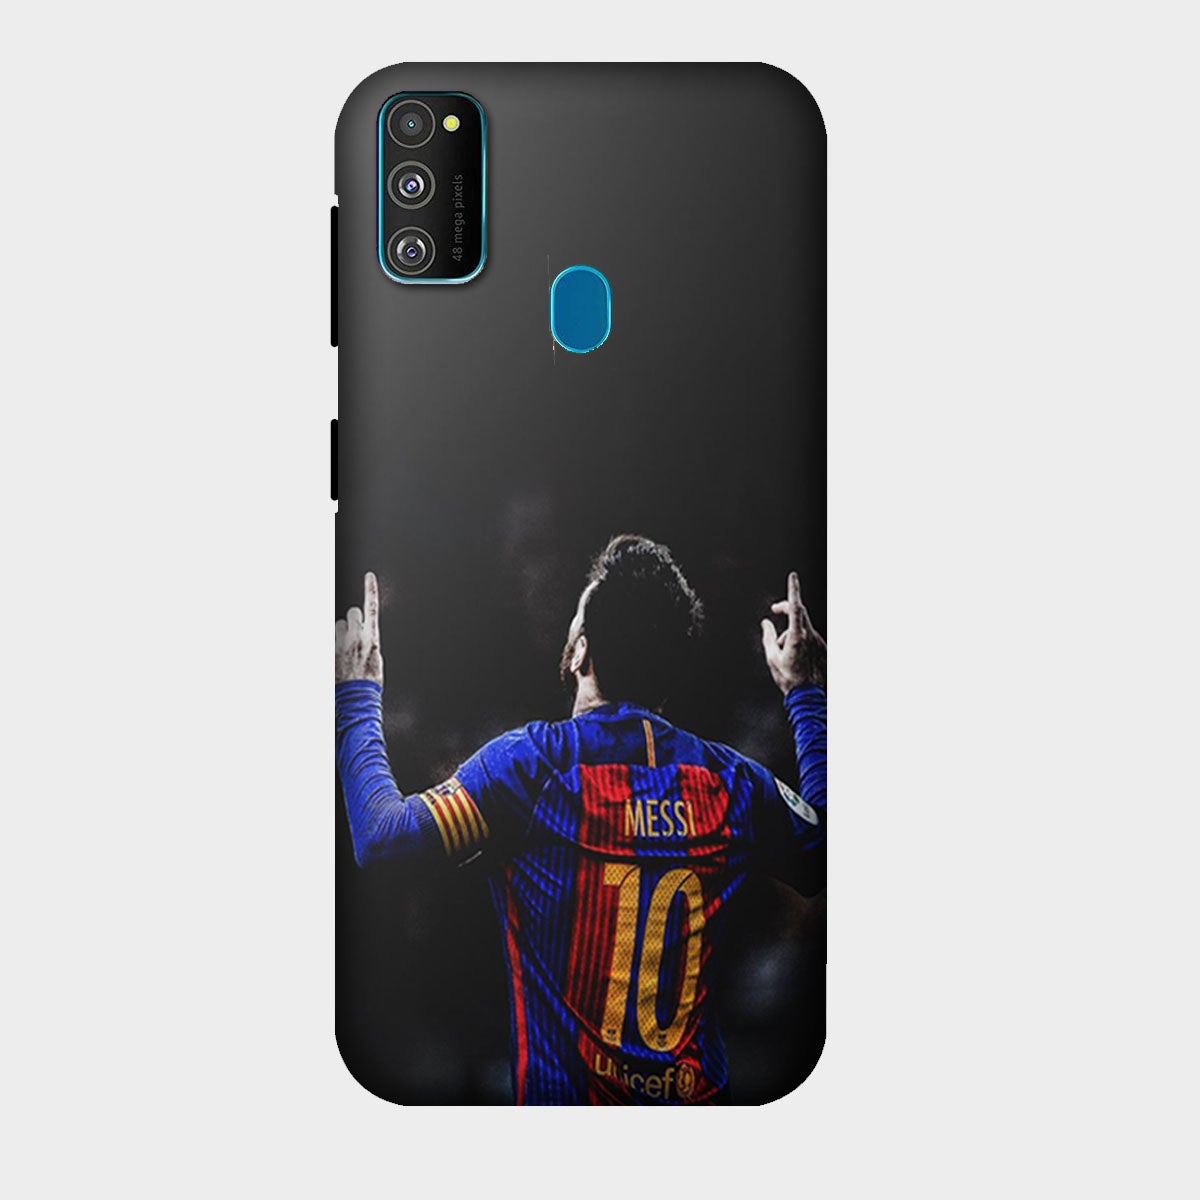 Lionel Messi Barcelona - Mobile Phone Cover - Hard Case - Samsung - Samsung